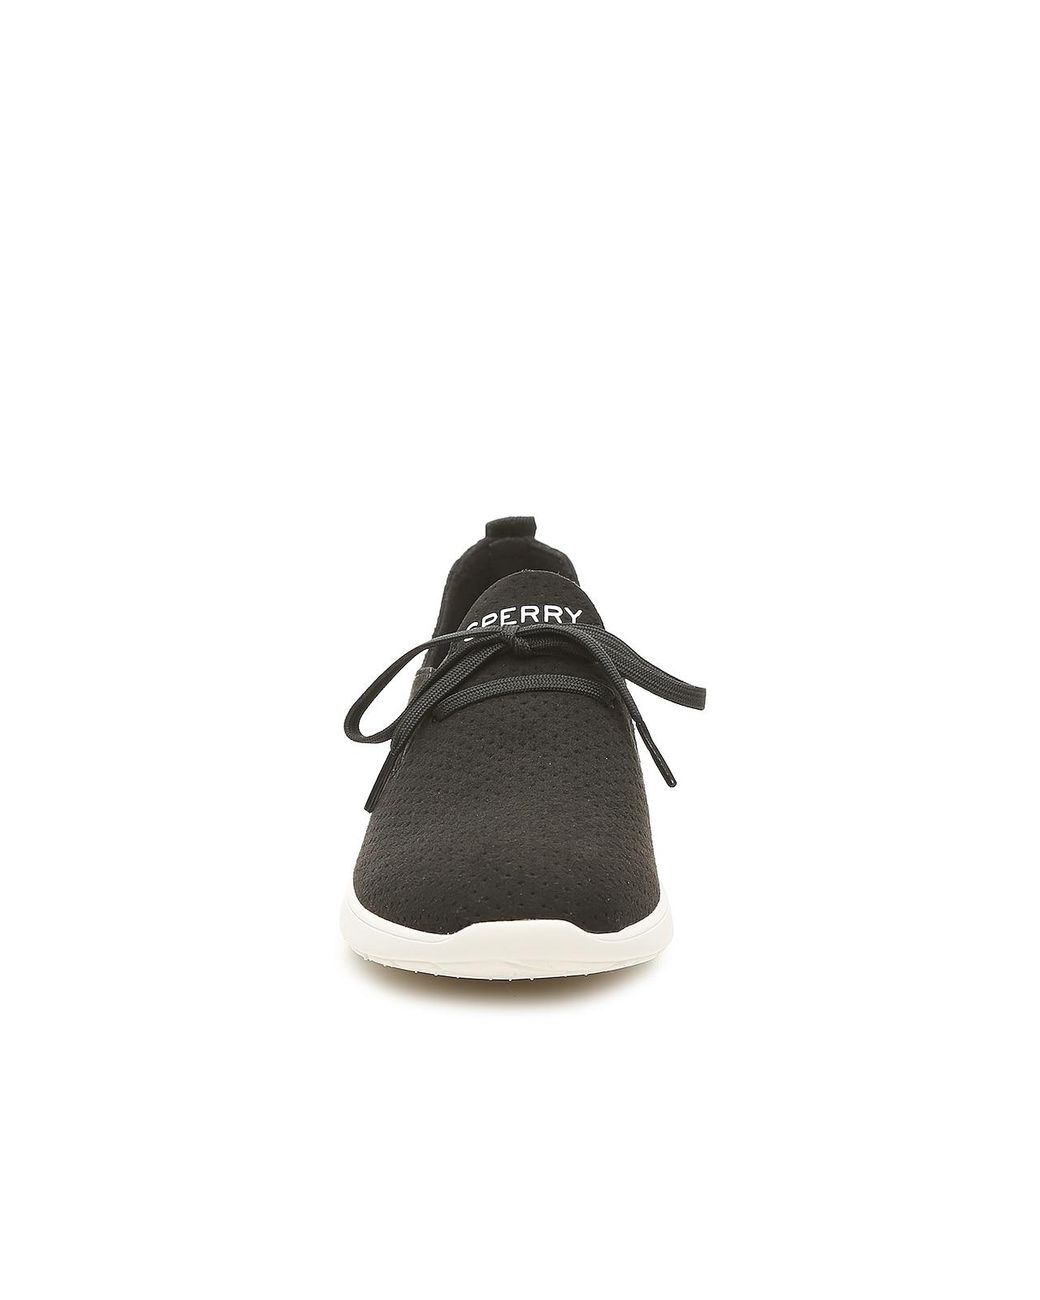 Sperry Top-Sider Rio Aqua Slip-on Sneaker in Black | Lyst